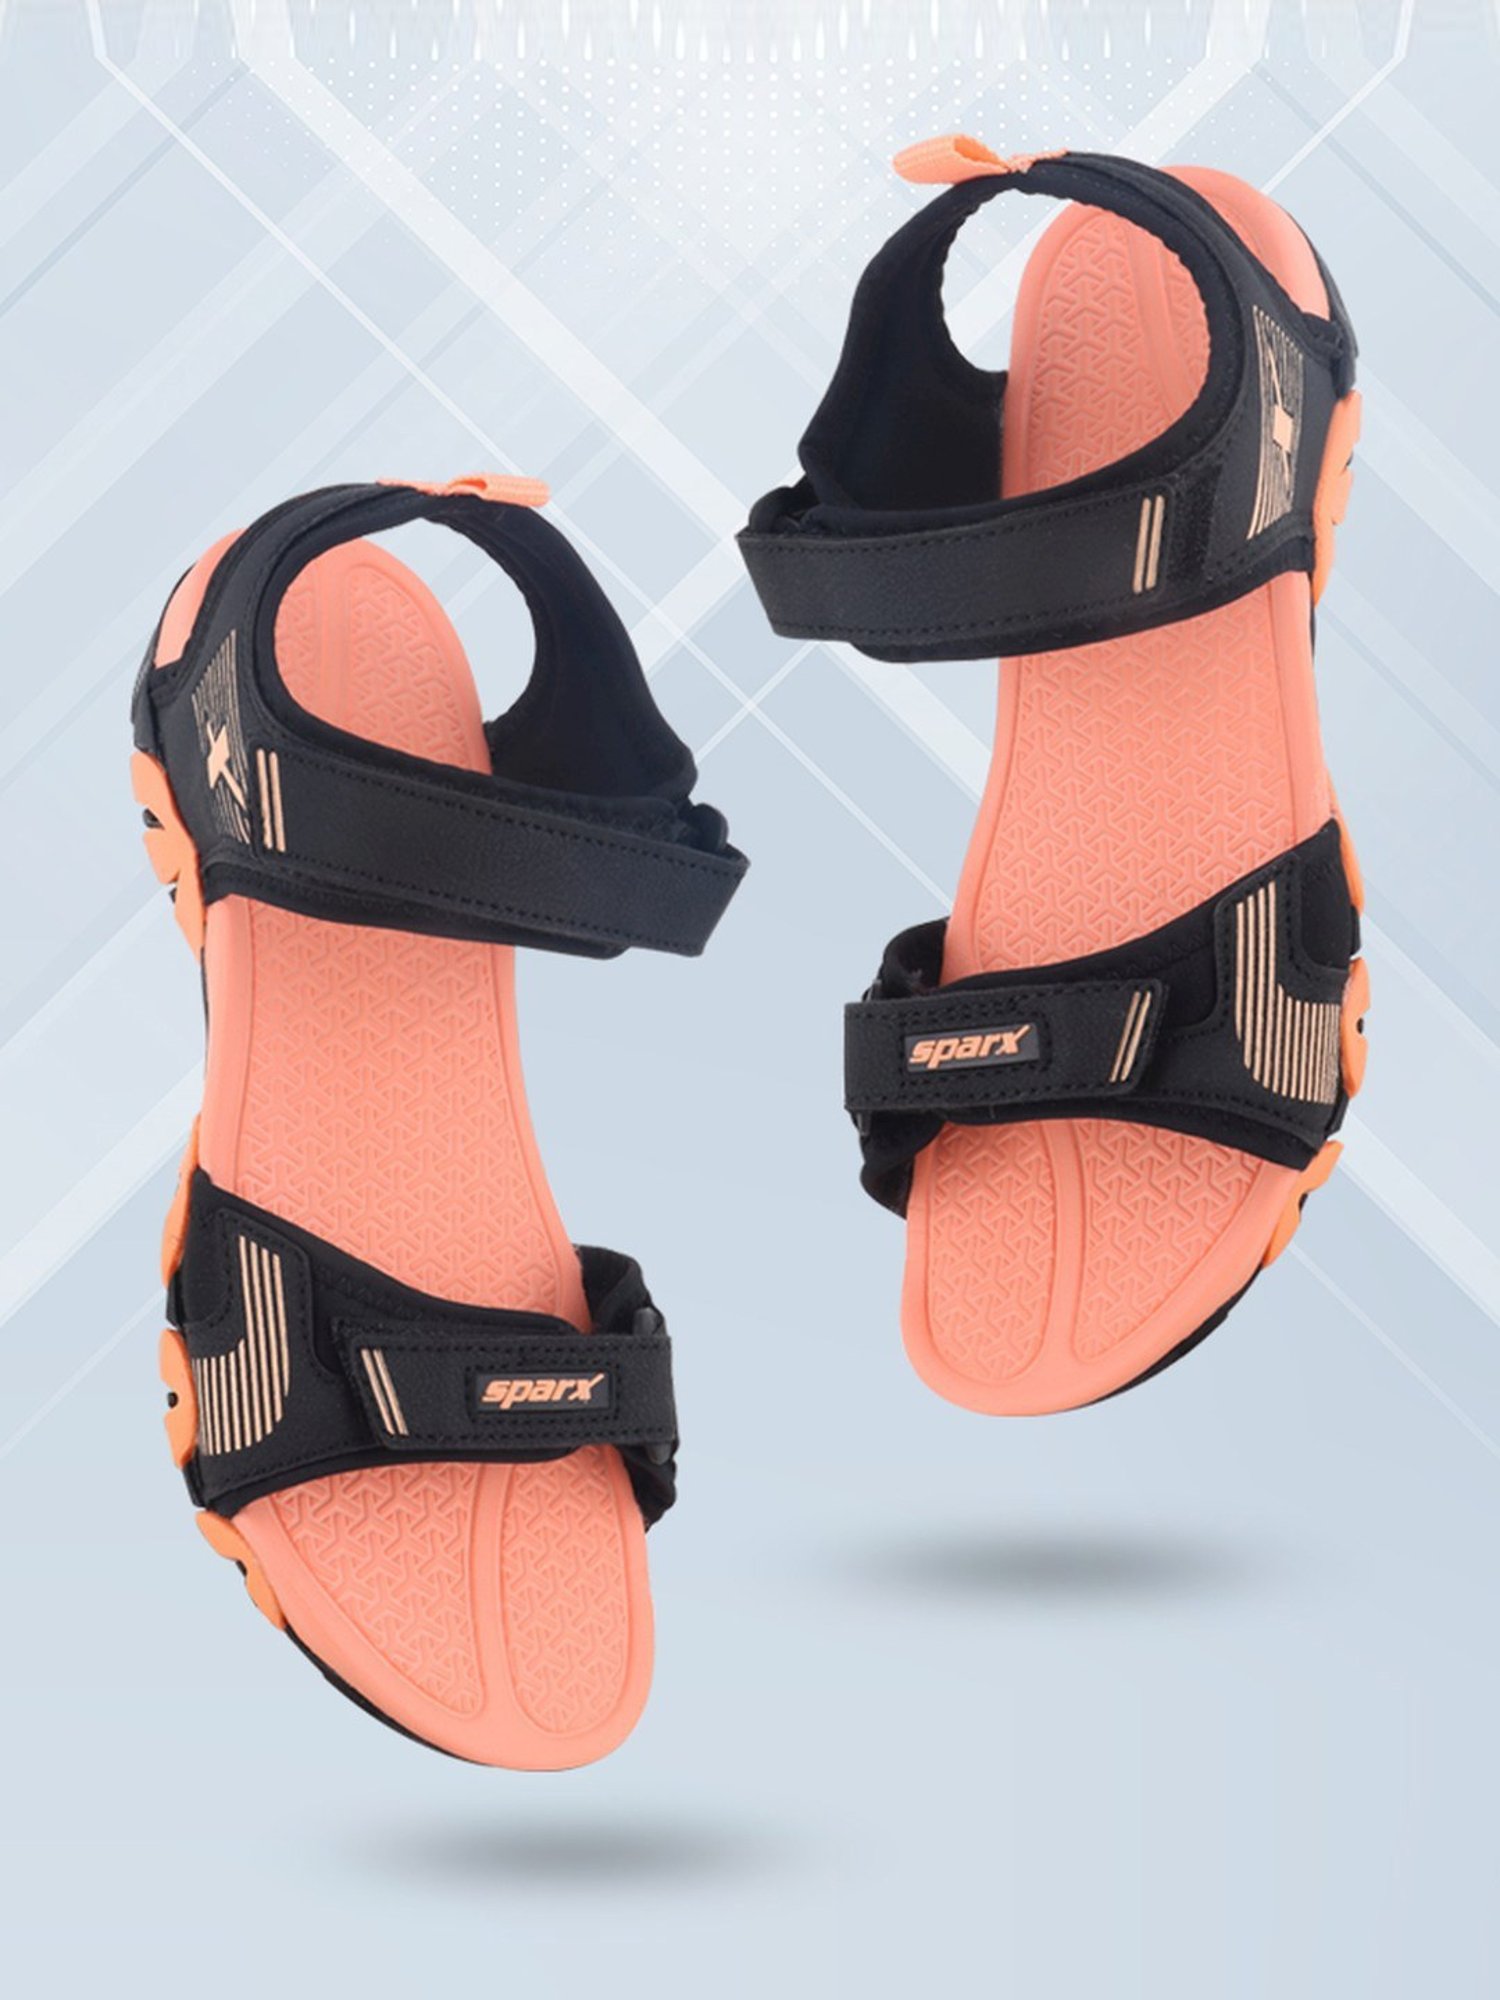 Sparx Sparx Women SS-803 Pink Grey Floater Sandals Women Pink, Grey Sports  Sandals - Buy PinkGrey Color Sparx Sparx Women SS-803 Pink Grey Floater Sandals  Women Pink, Grey Sports Sandals Online at